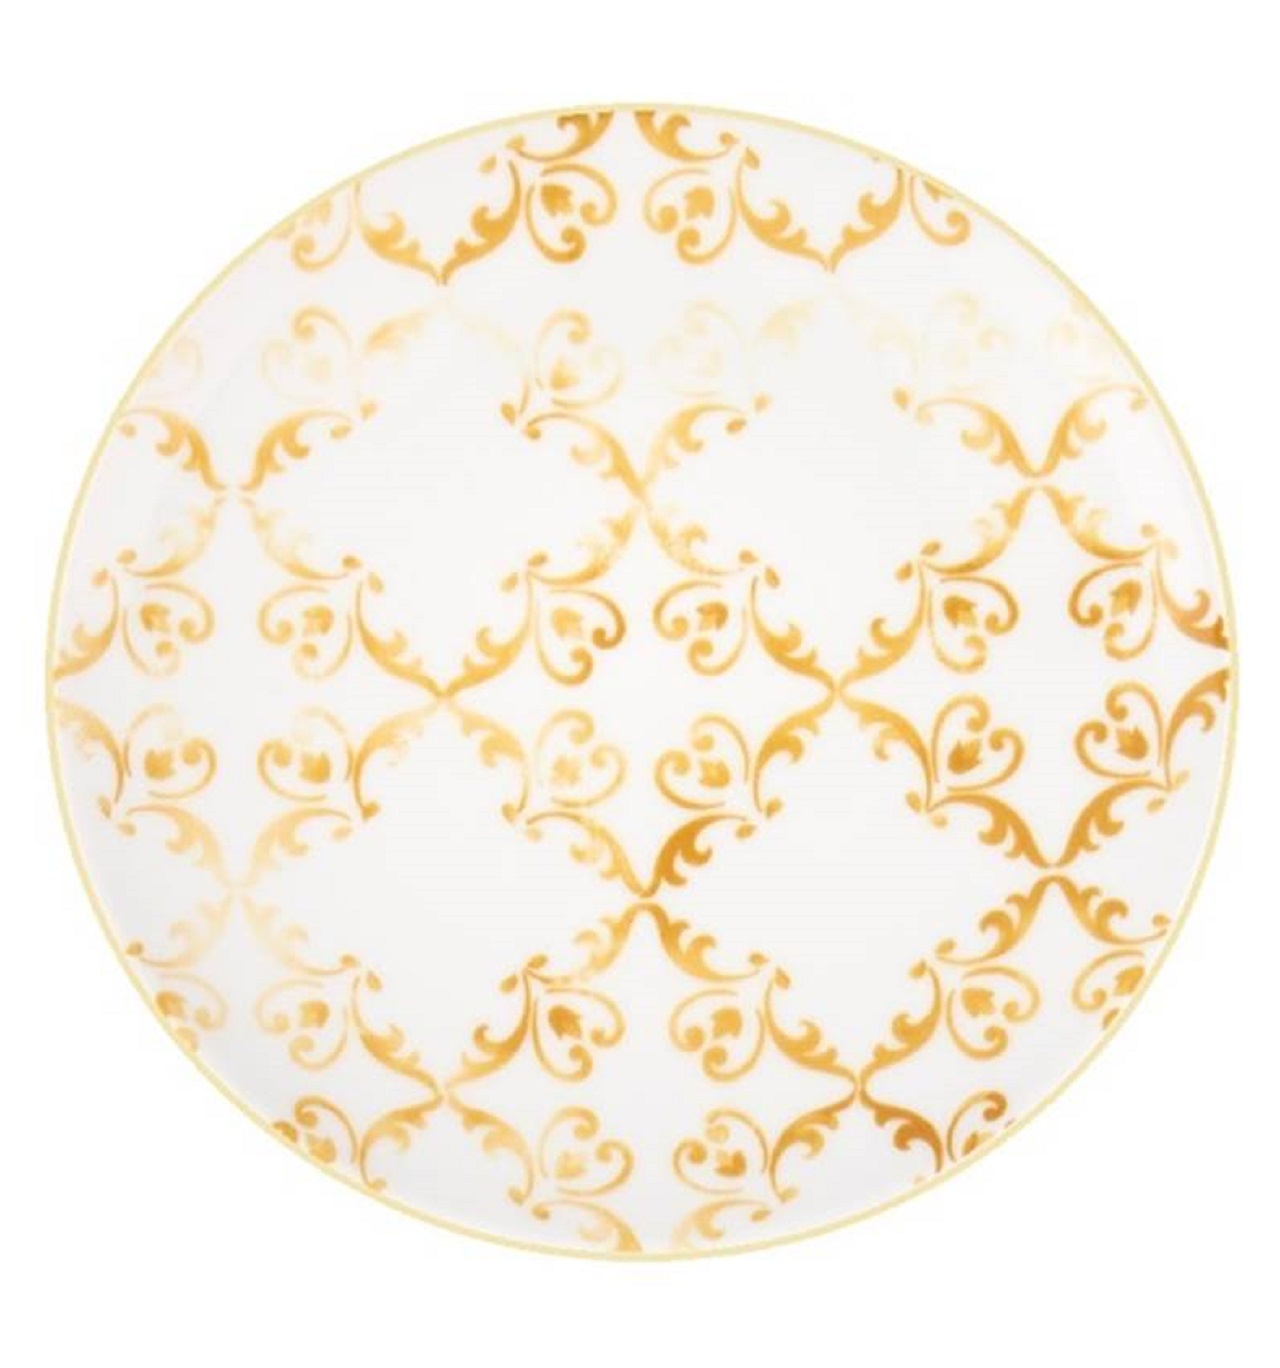 Charger Plate Vista Alegre Tiles Collection 33 cm GOLD